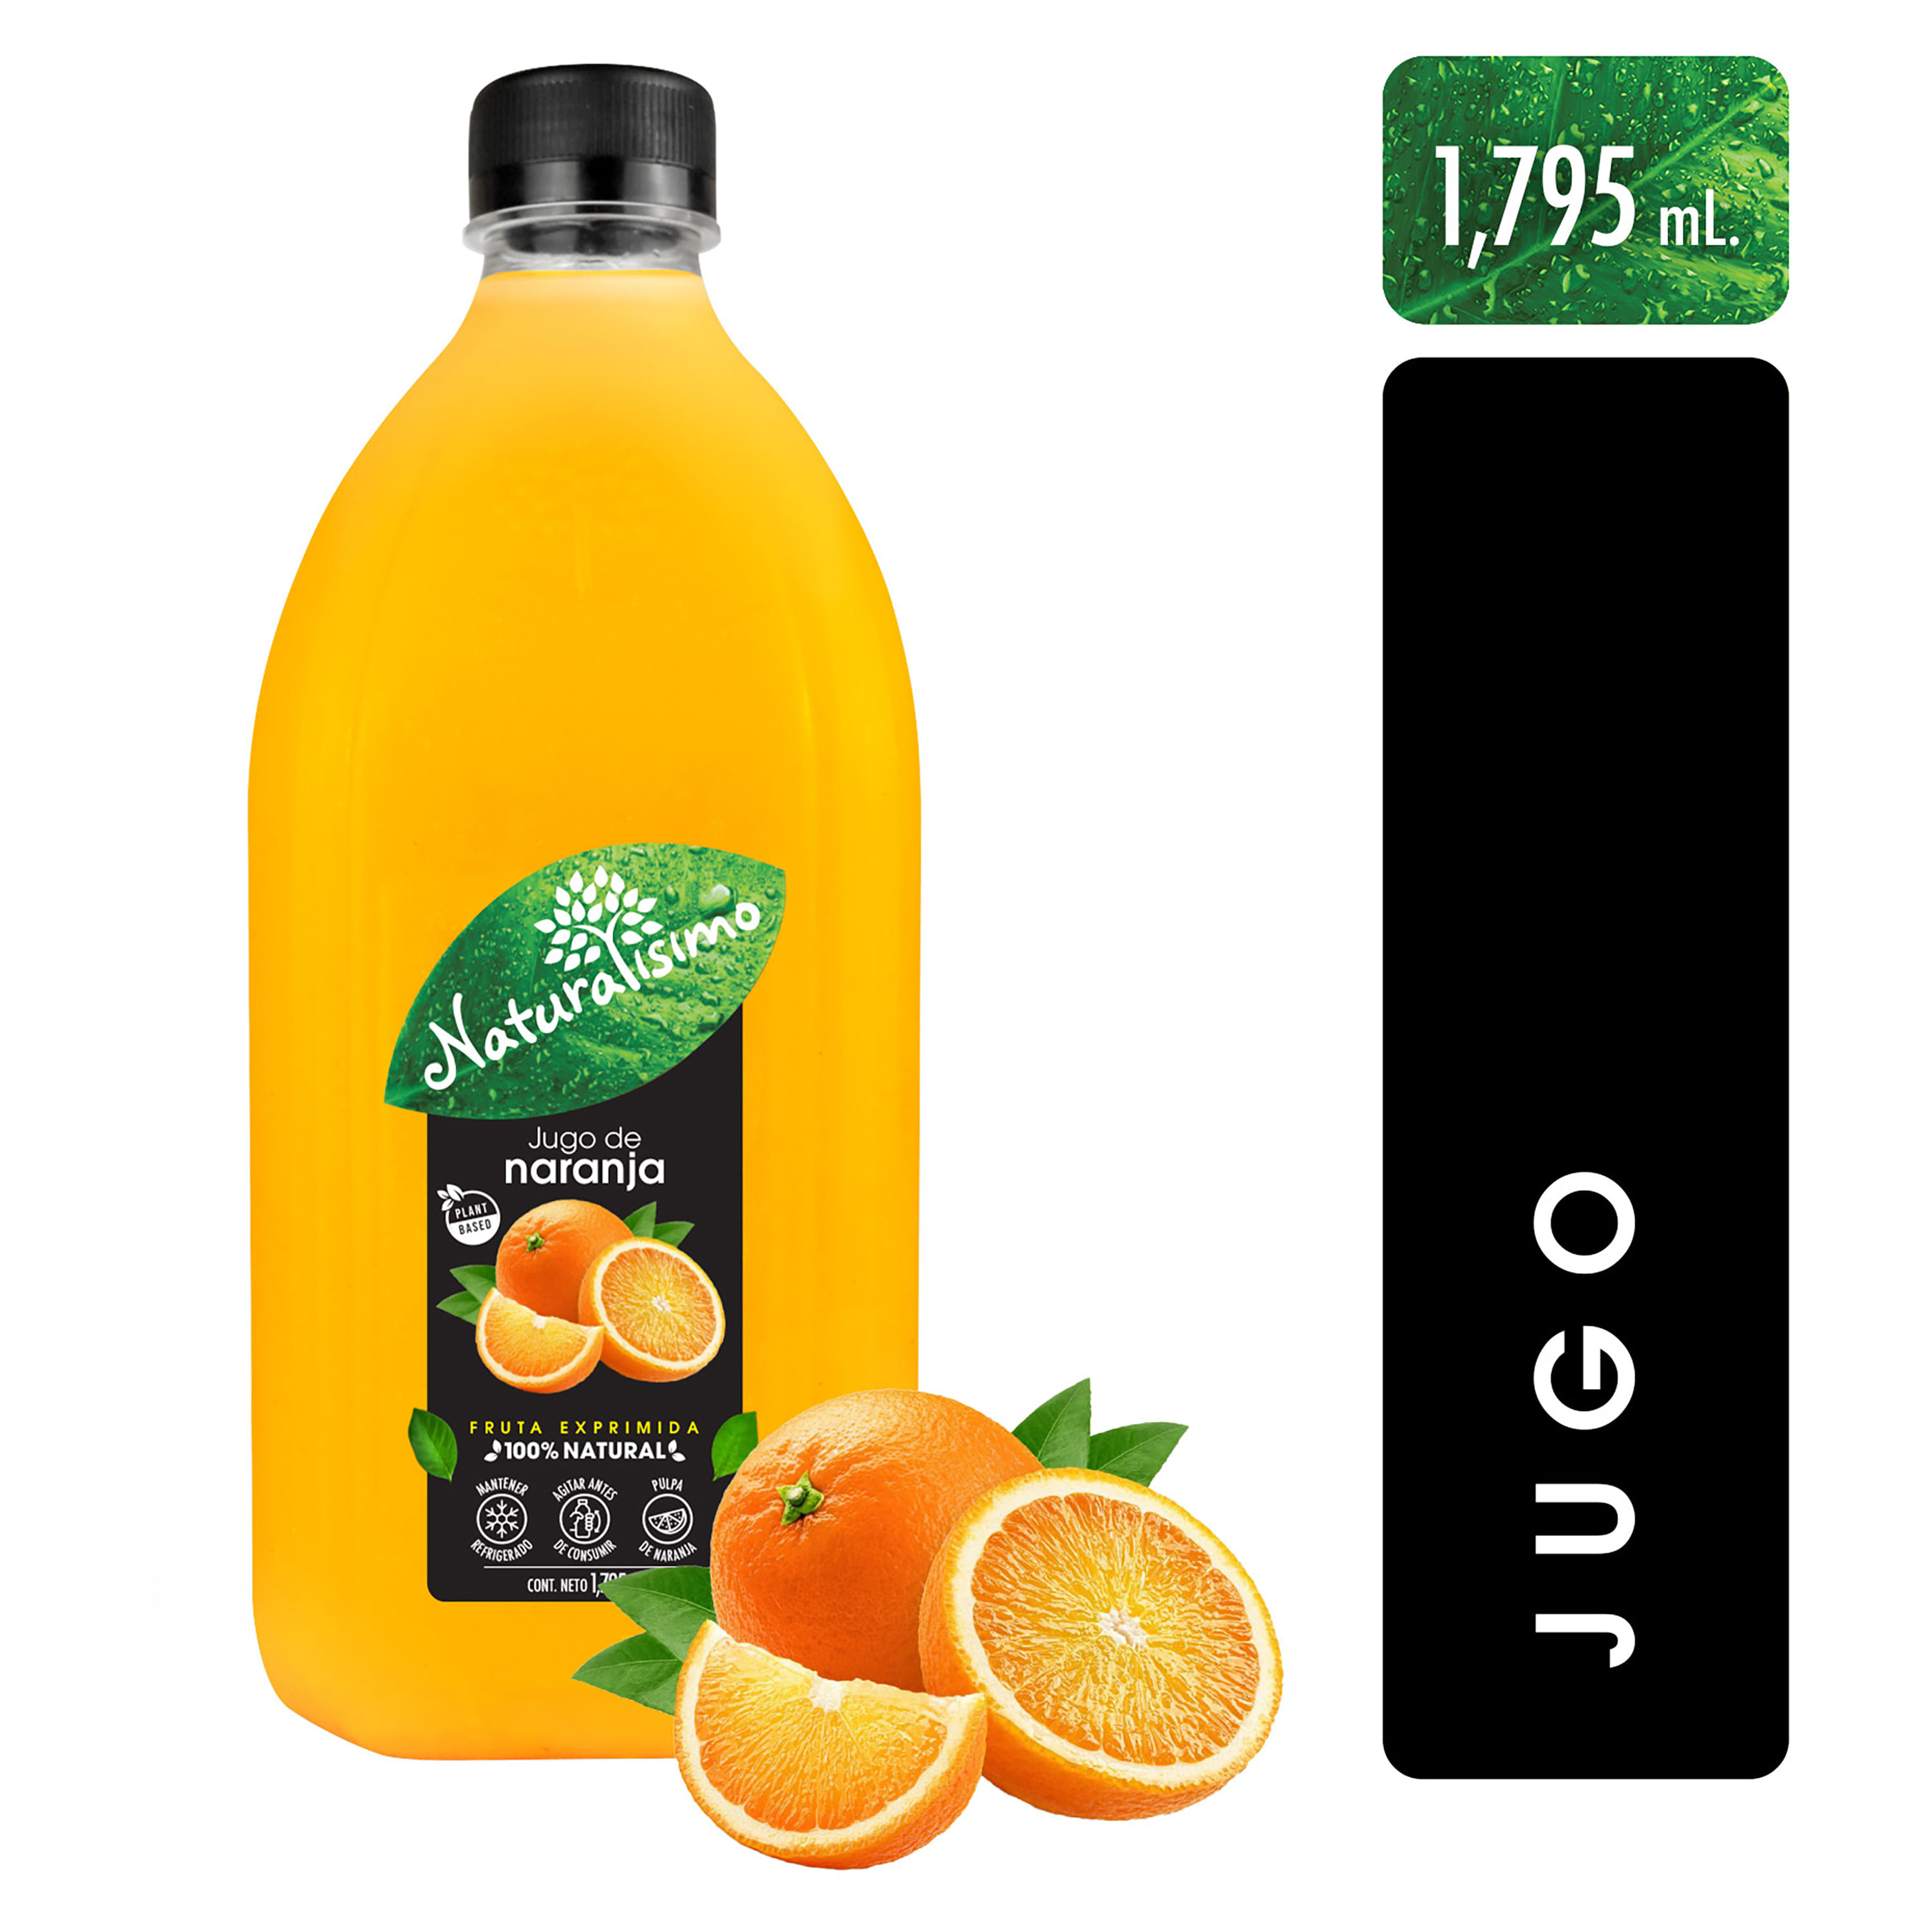 Jugo-Naturalisimo-Naranja-1795ml-1-31164